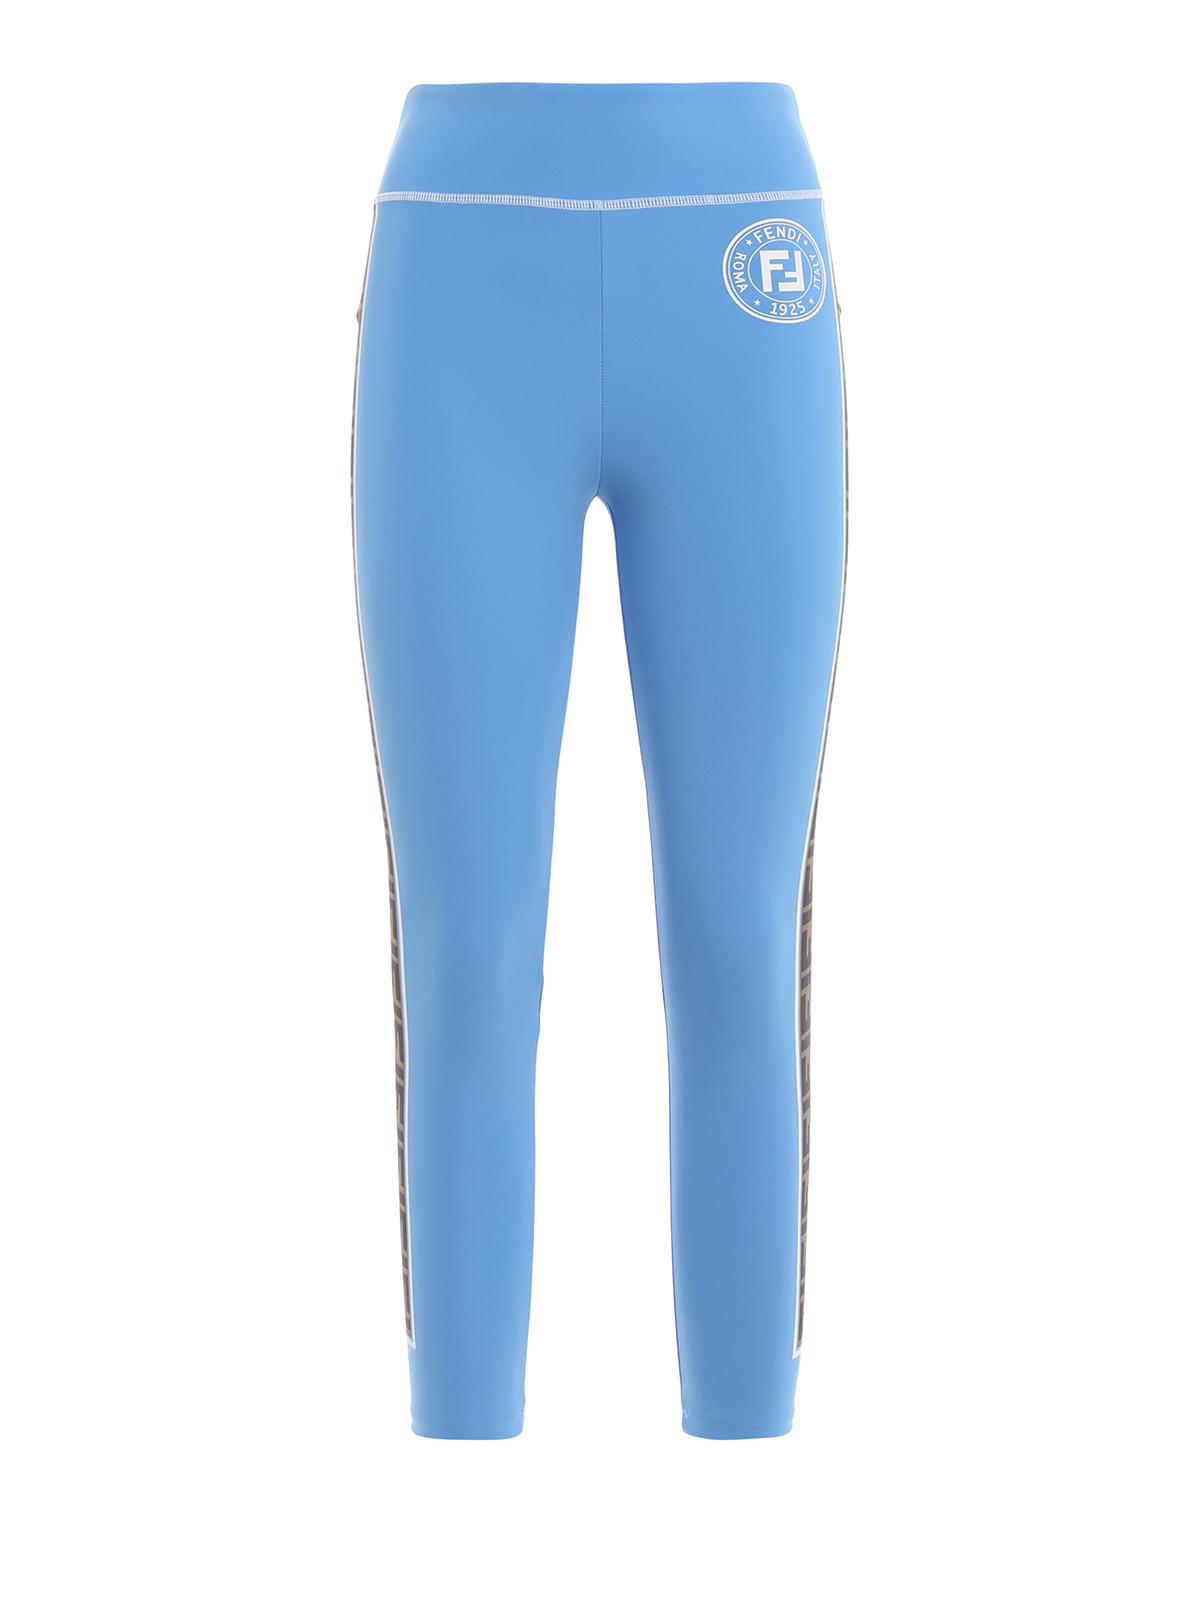 Fendi Fendirama light blue leggings